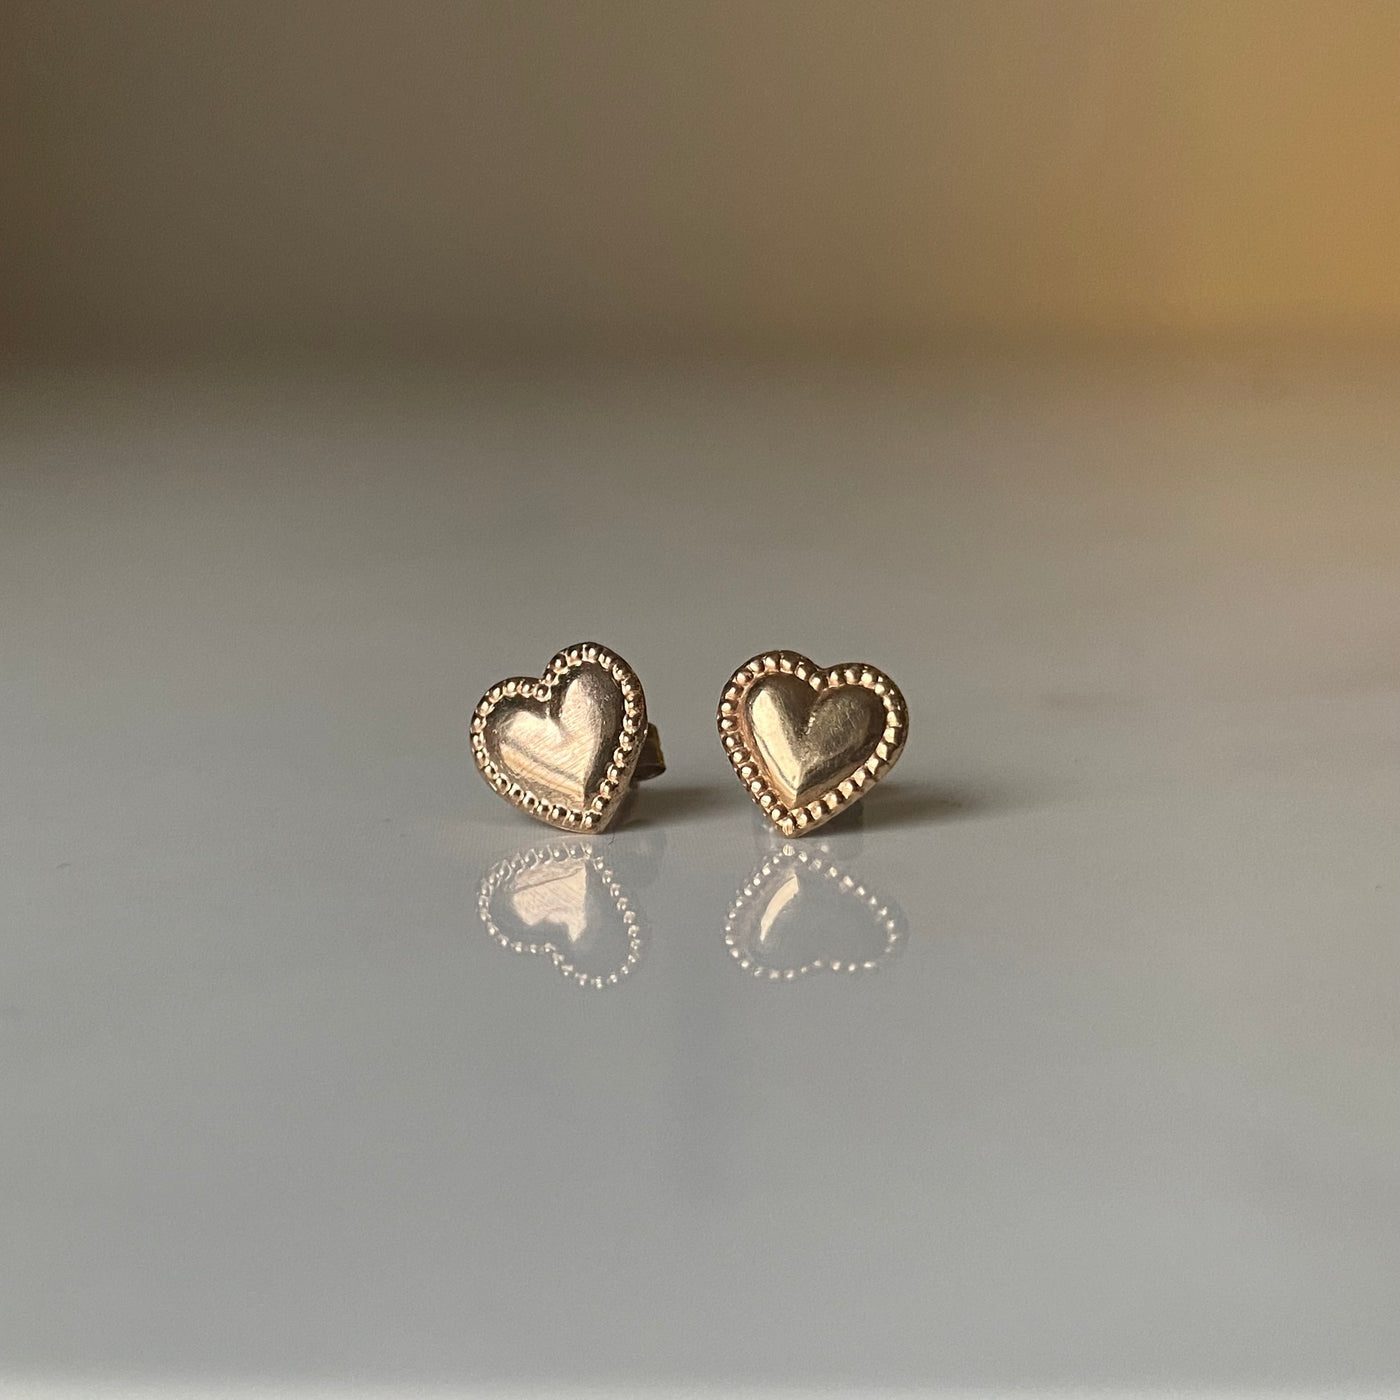 9ct Gold Vintage Heart Stud Earrings